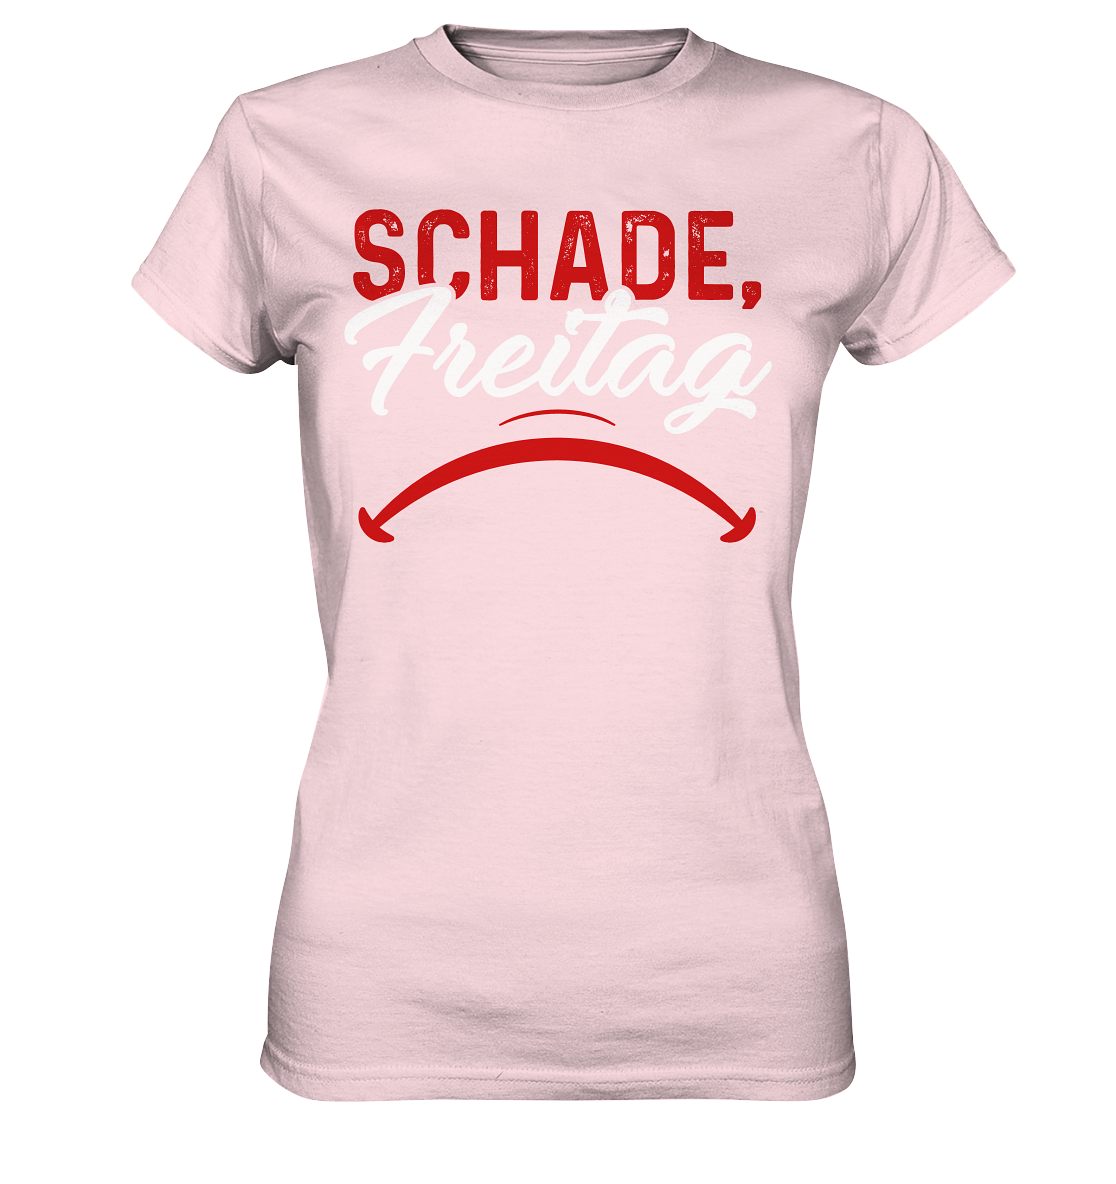 Schade Freitag - Ladies Premium Shirt